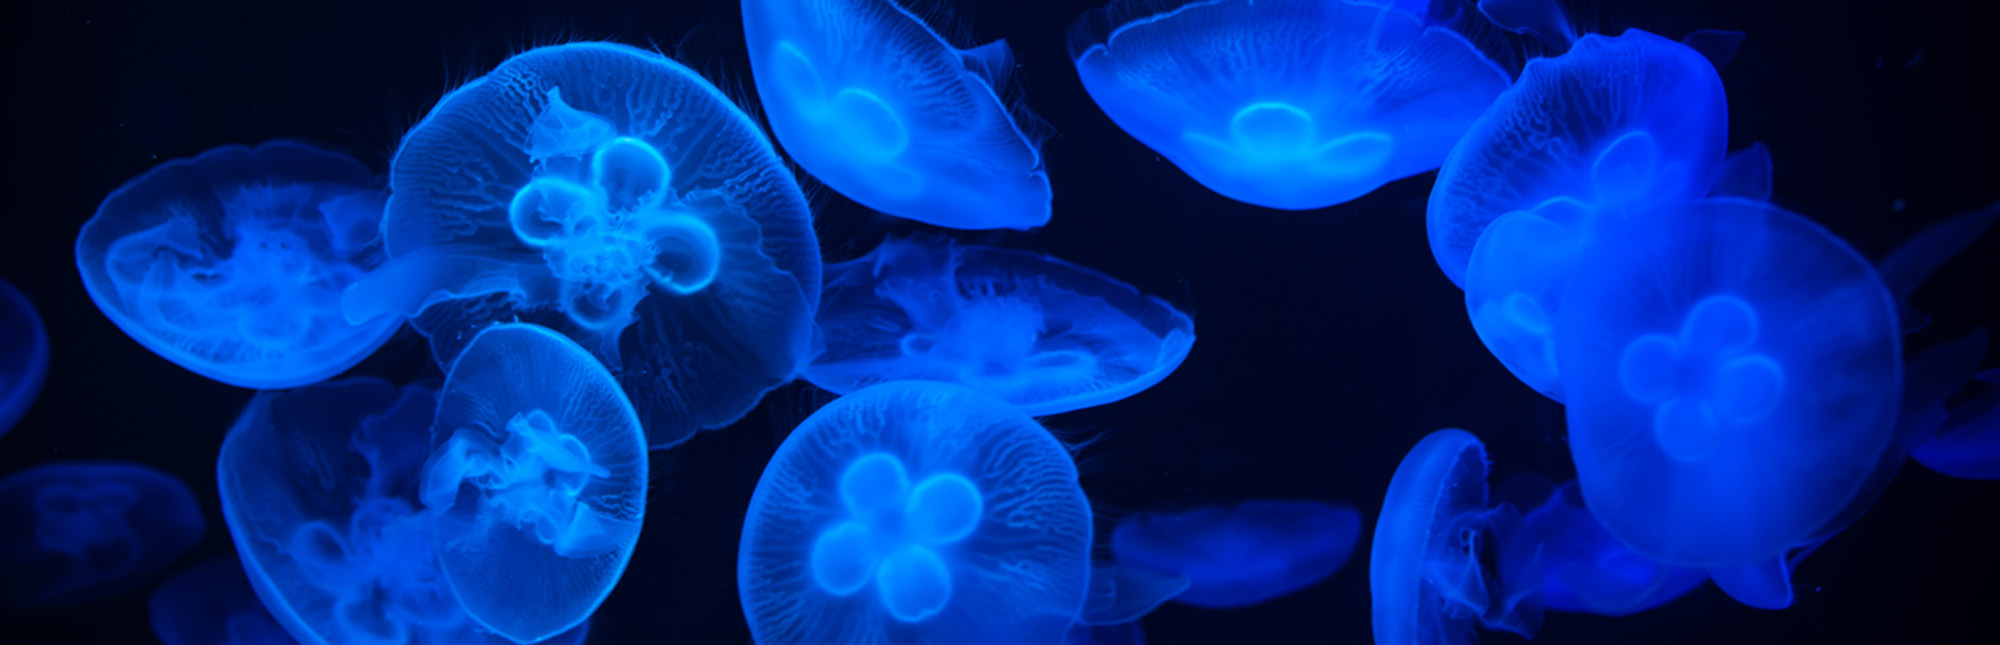 Bioluminescent jellyfish in the deep ocean